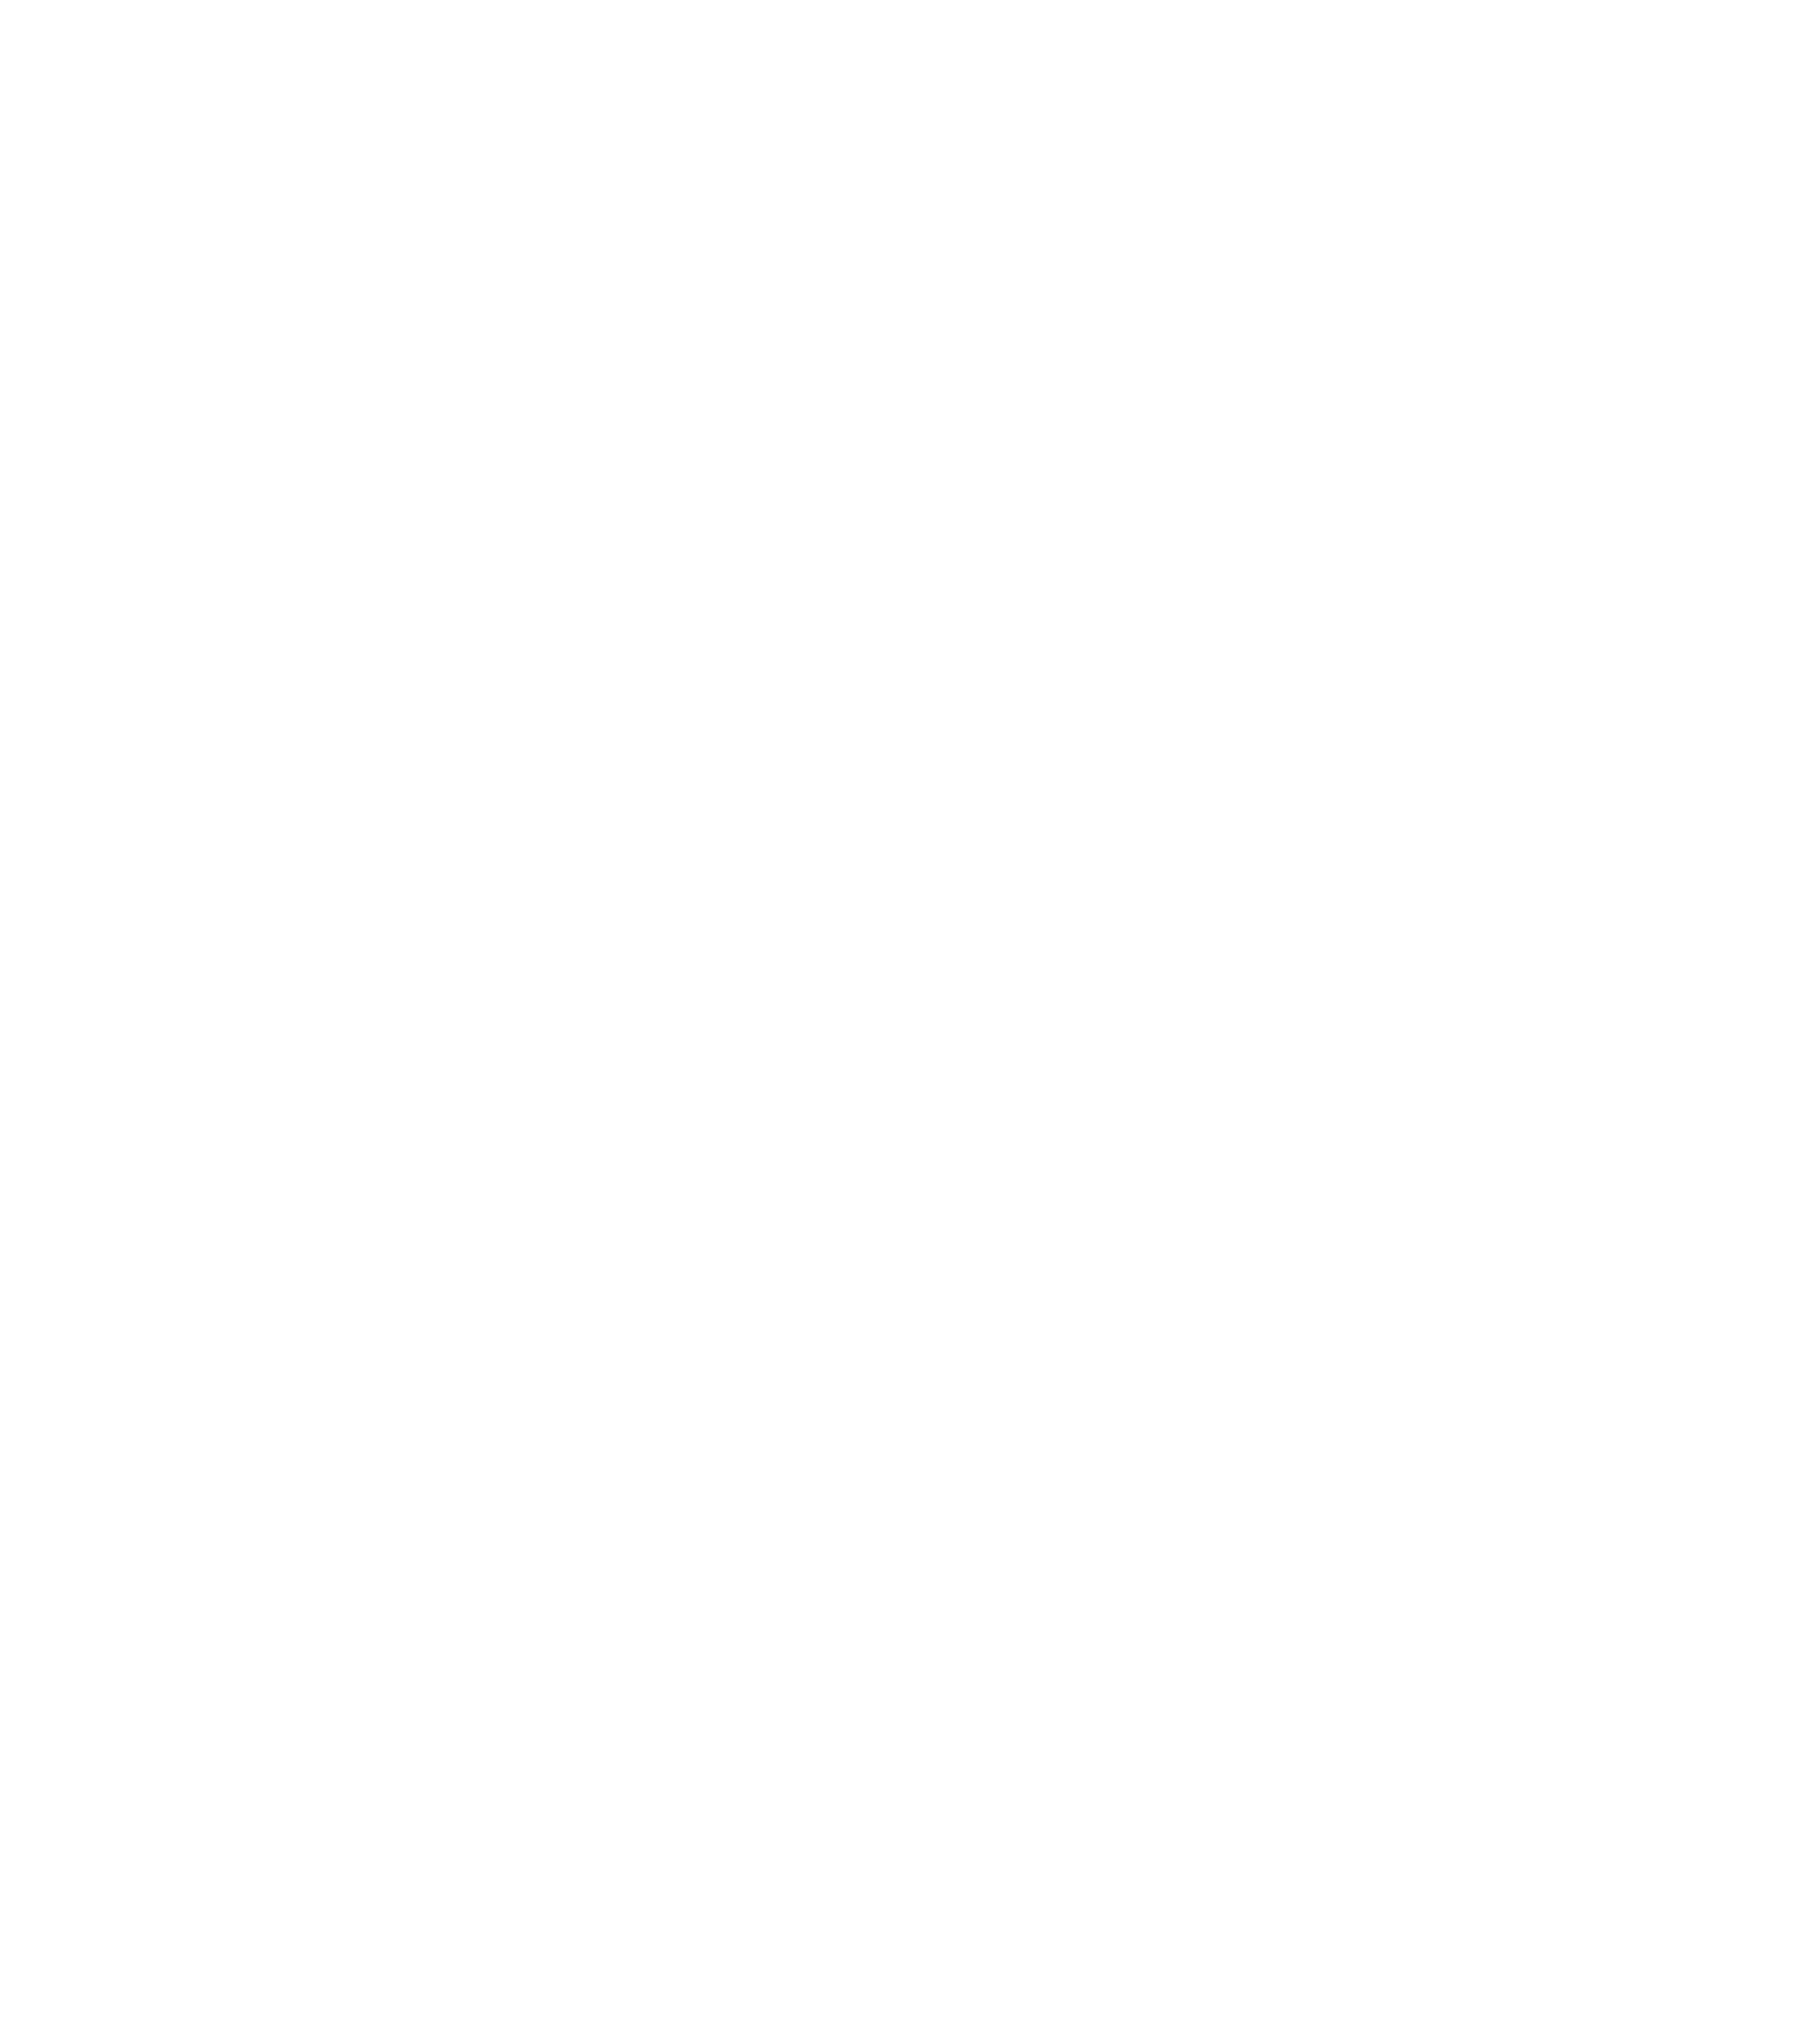 Webinmaker-Softtech-Pvt-Ltd-The-Fashion-Junction

